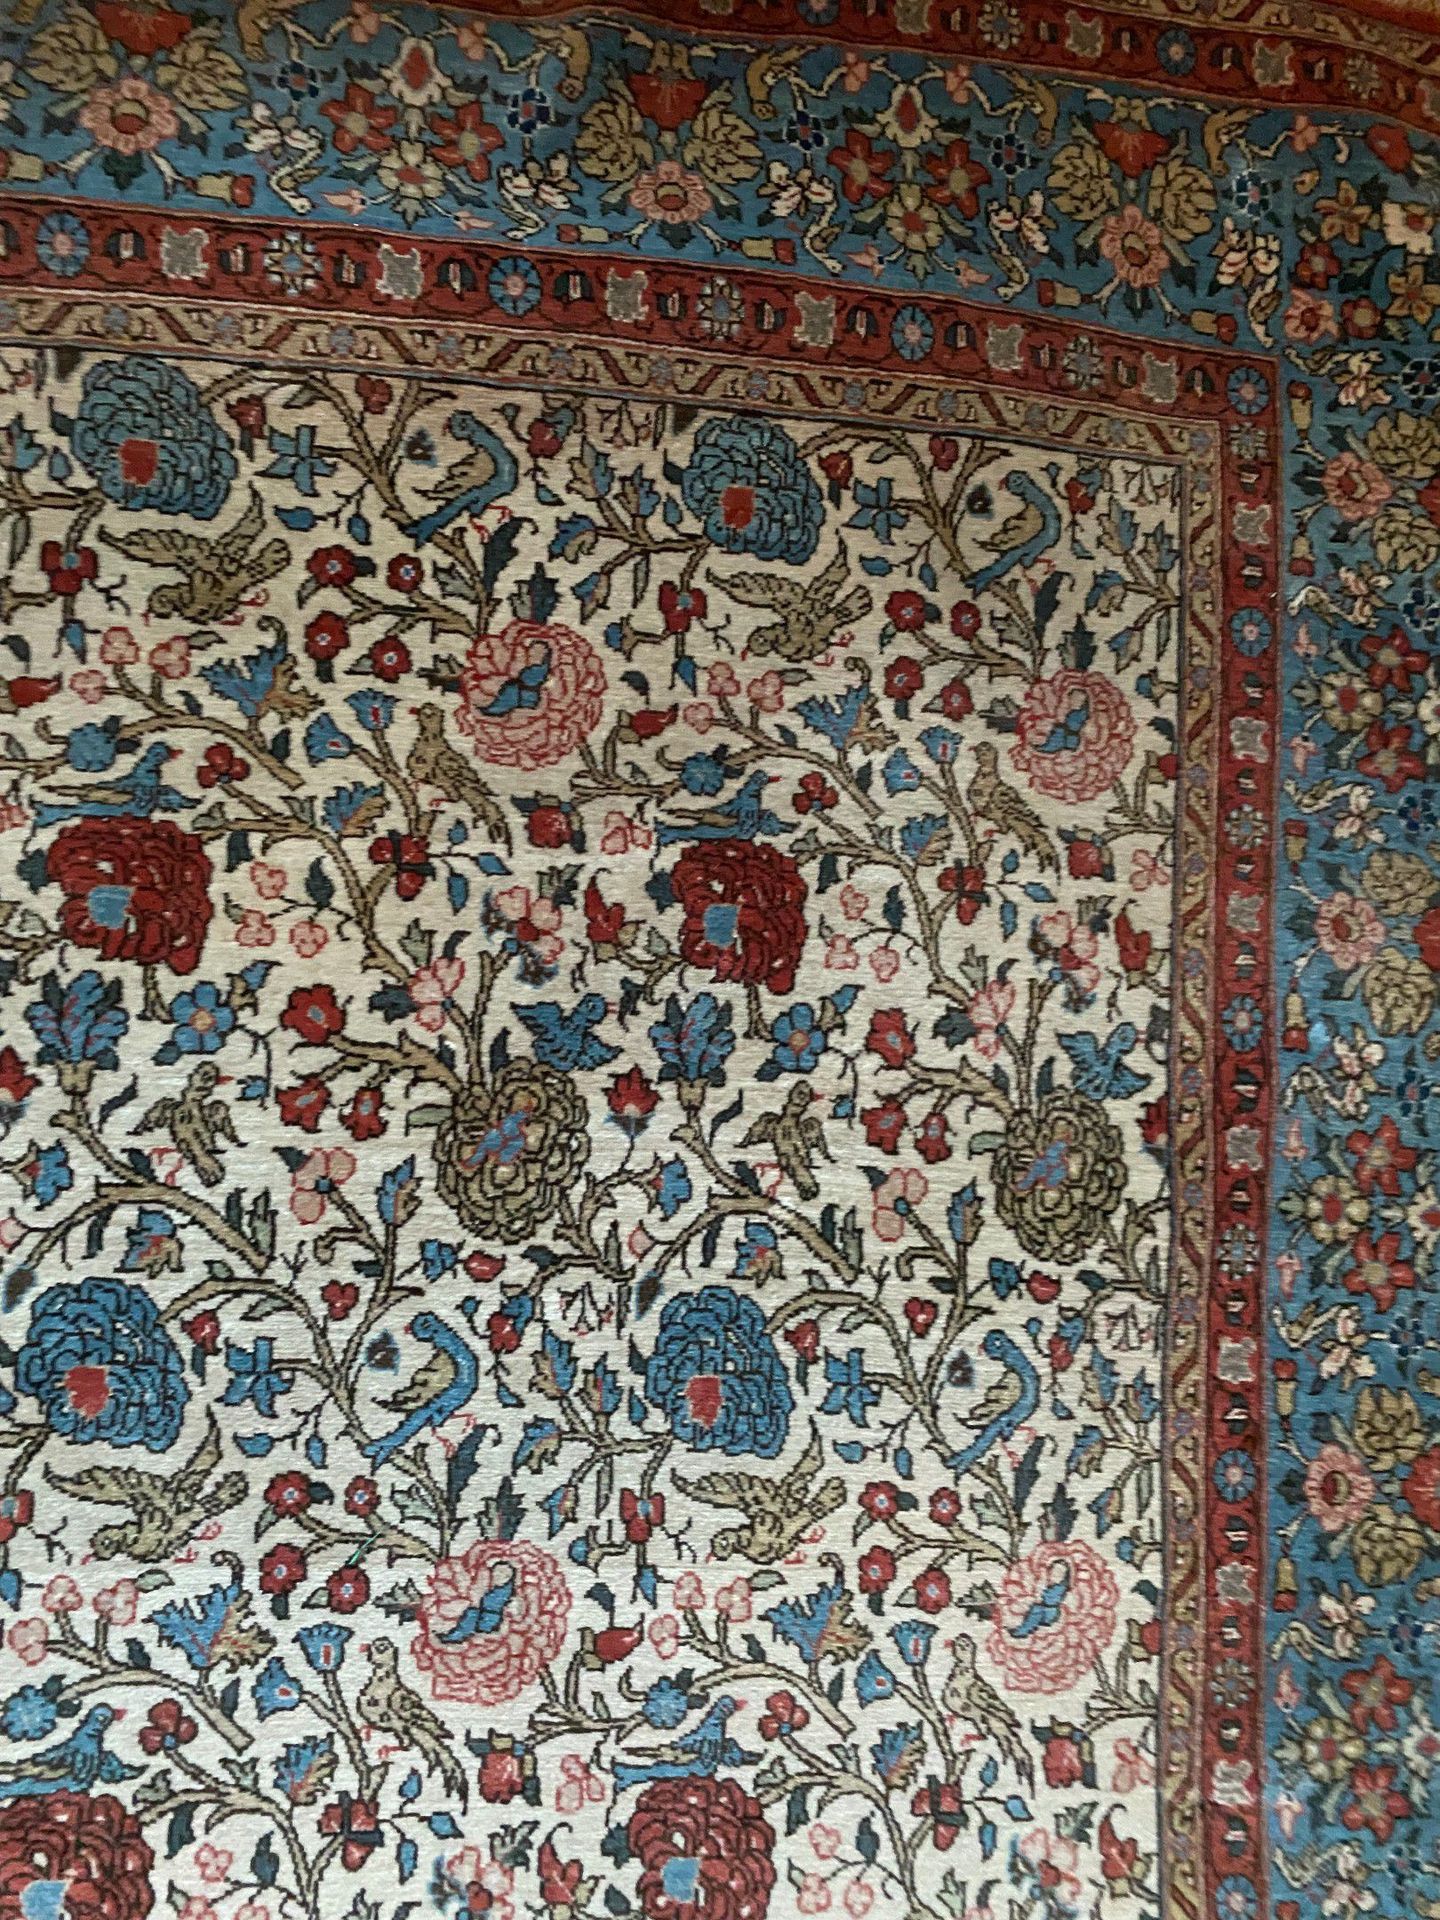 Null 东方地毯，米色背景，装饰有花枝和鸟。